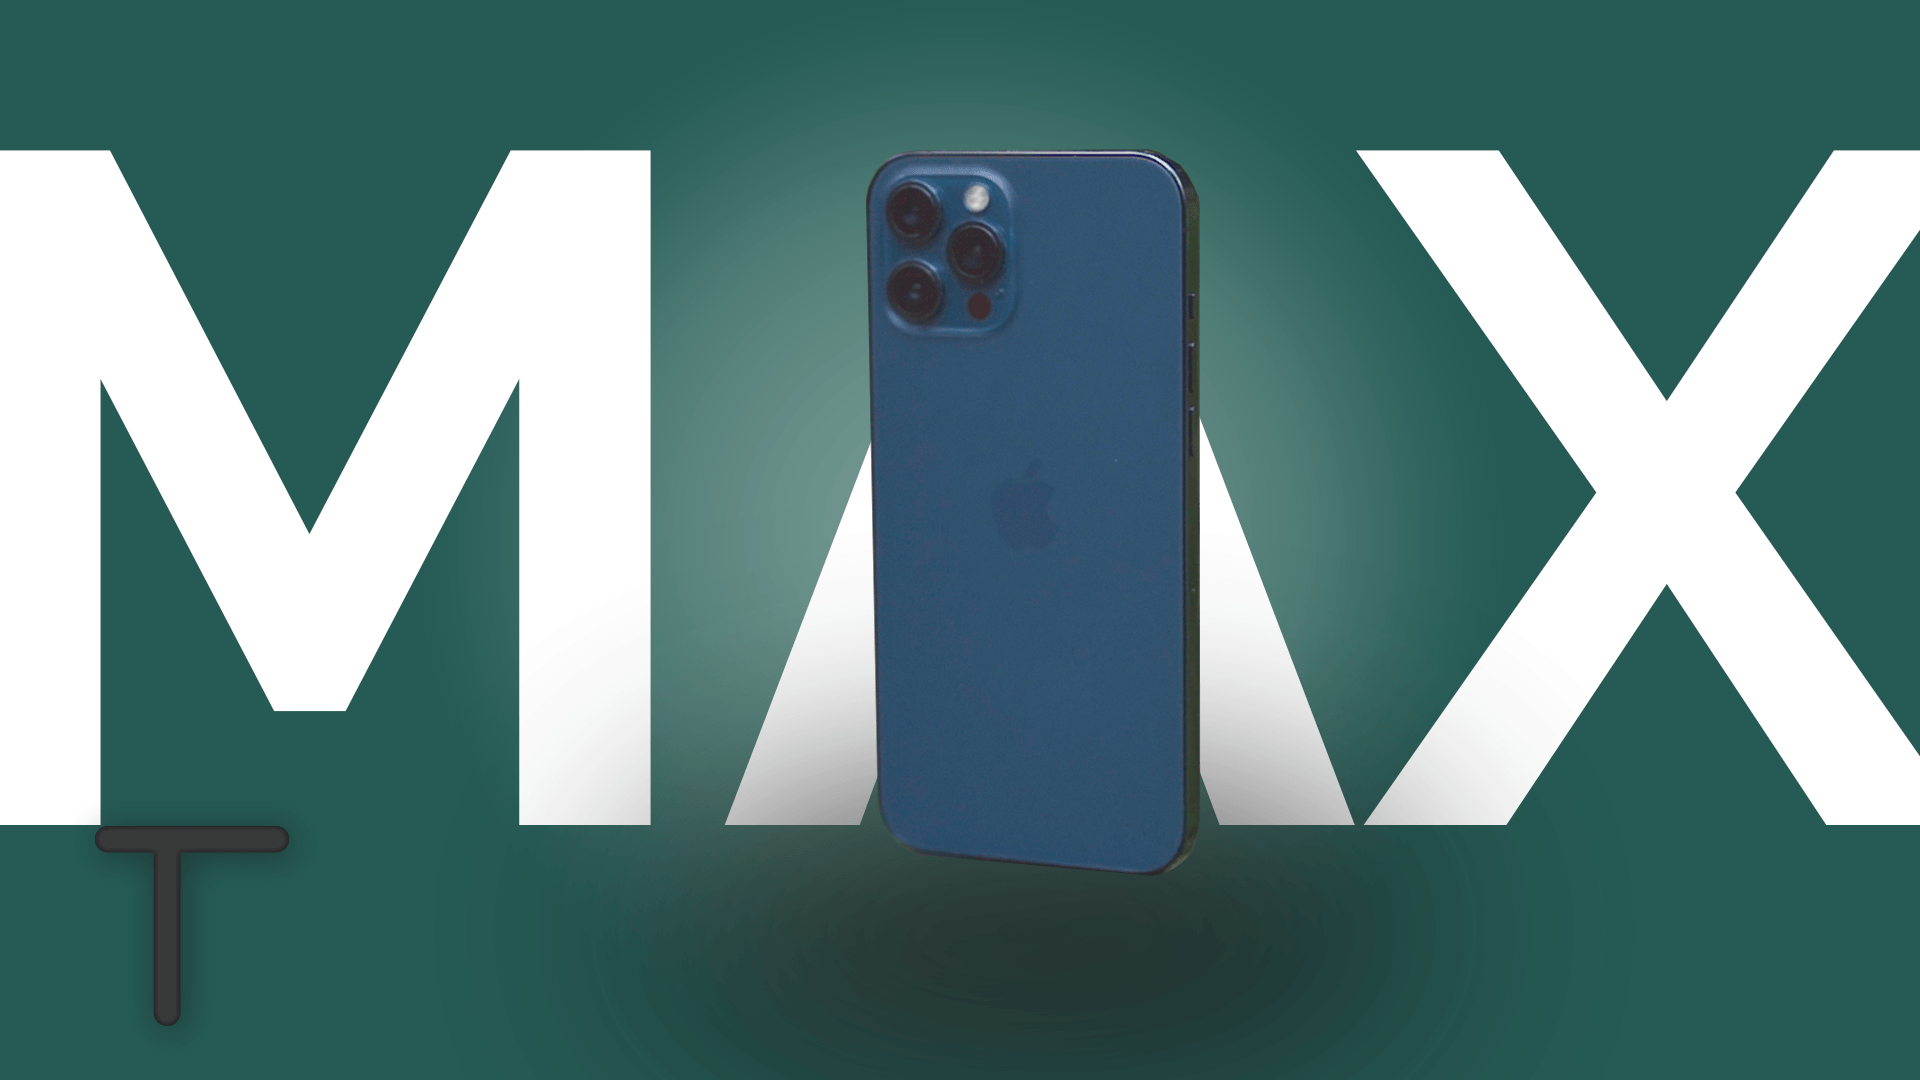 Groß, aber auch großartig? iPhone 12 Pro Max Review